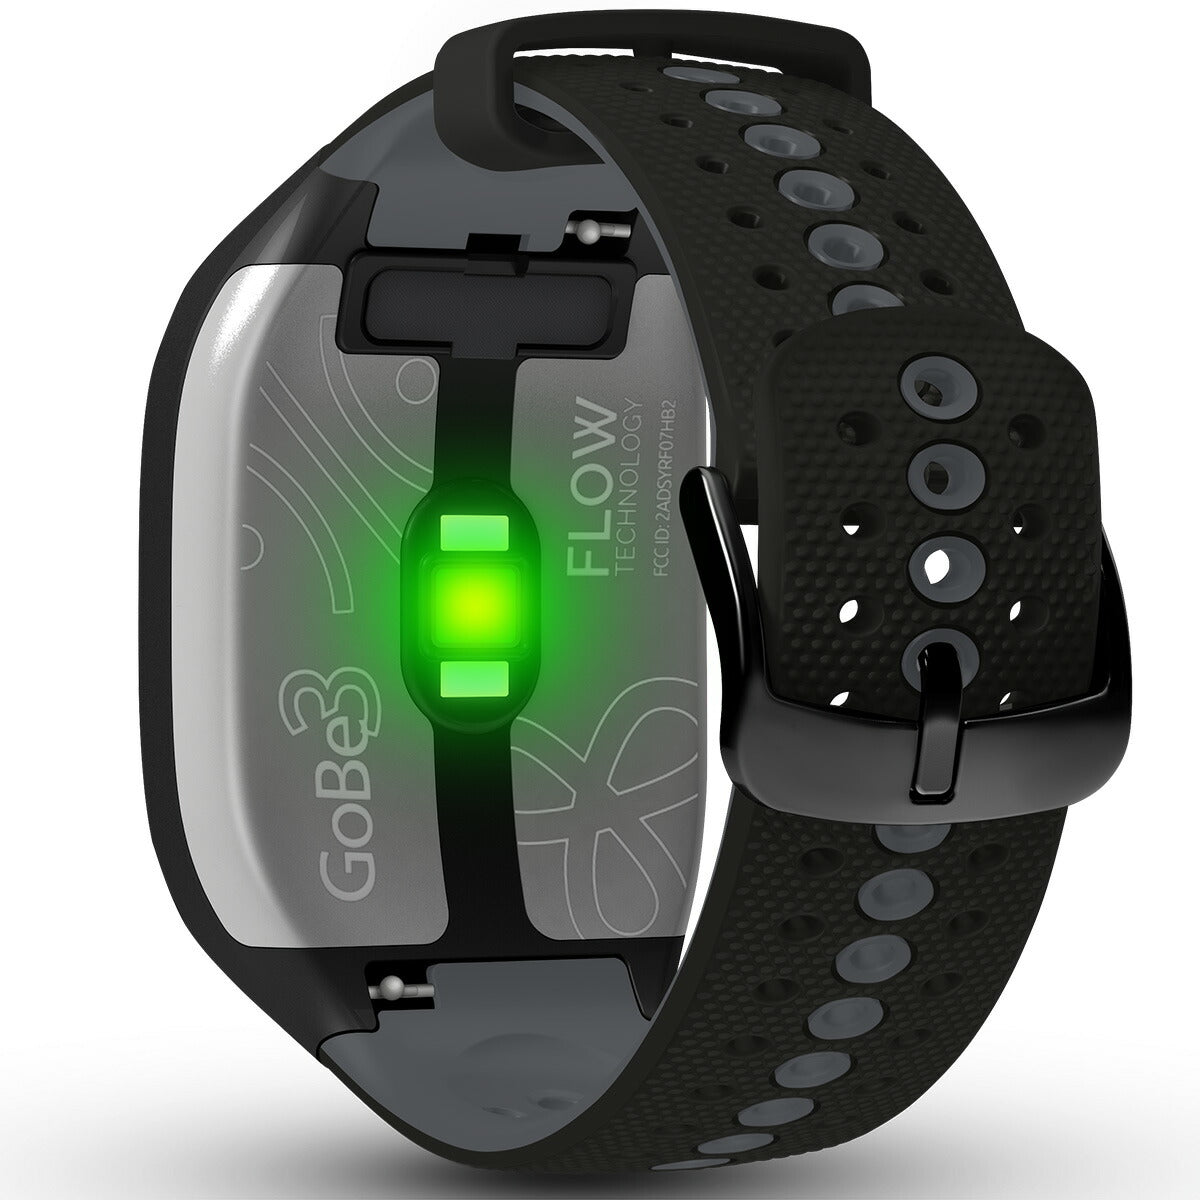 HEALBE GoBe3 ゴービー3 スマートウォッチ ウェアラブル スマートバンド 腕時計 摂取カロリー自動計測 HGB3-BK-GY